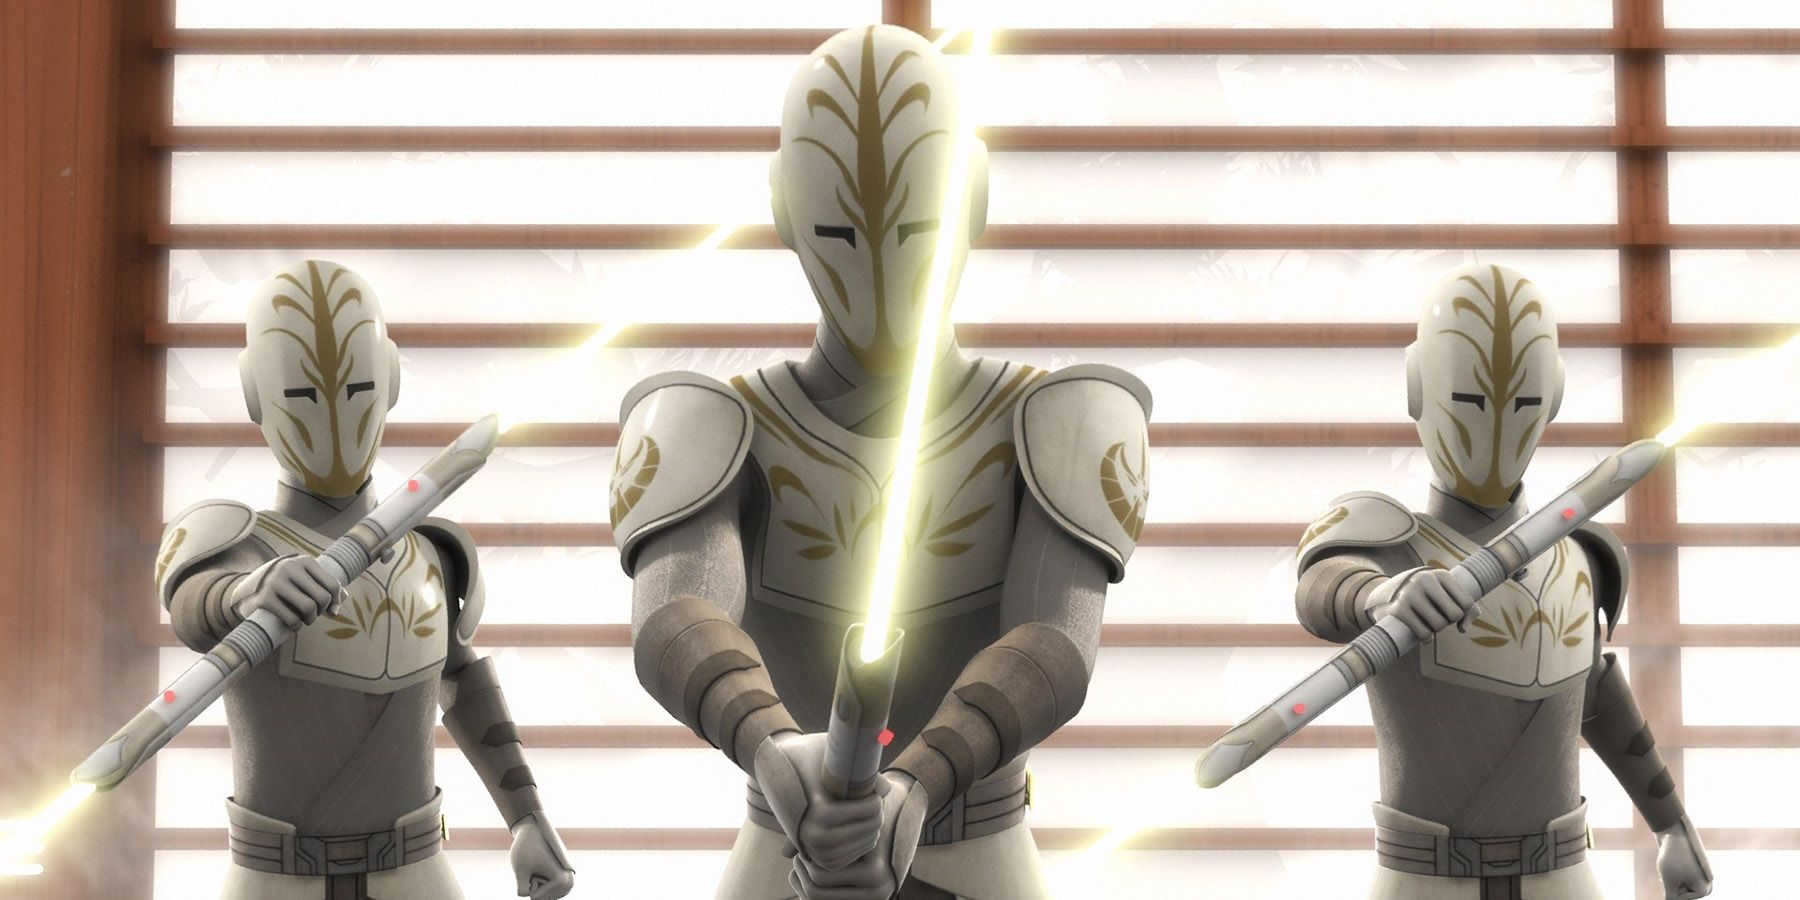 Jedi Temple Guards wielding their lightsabers in Star Wars Rebels.